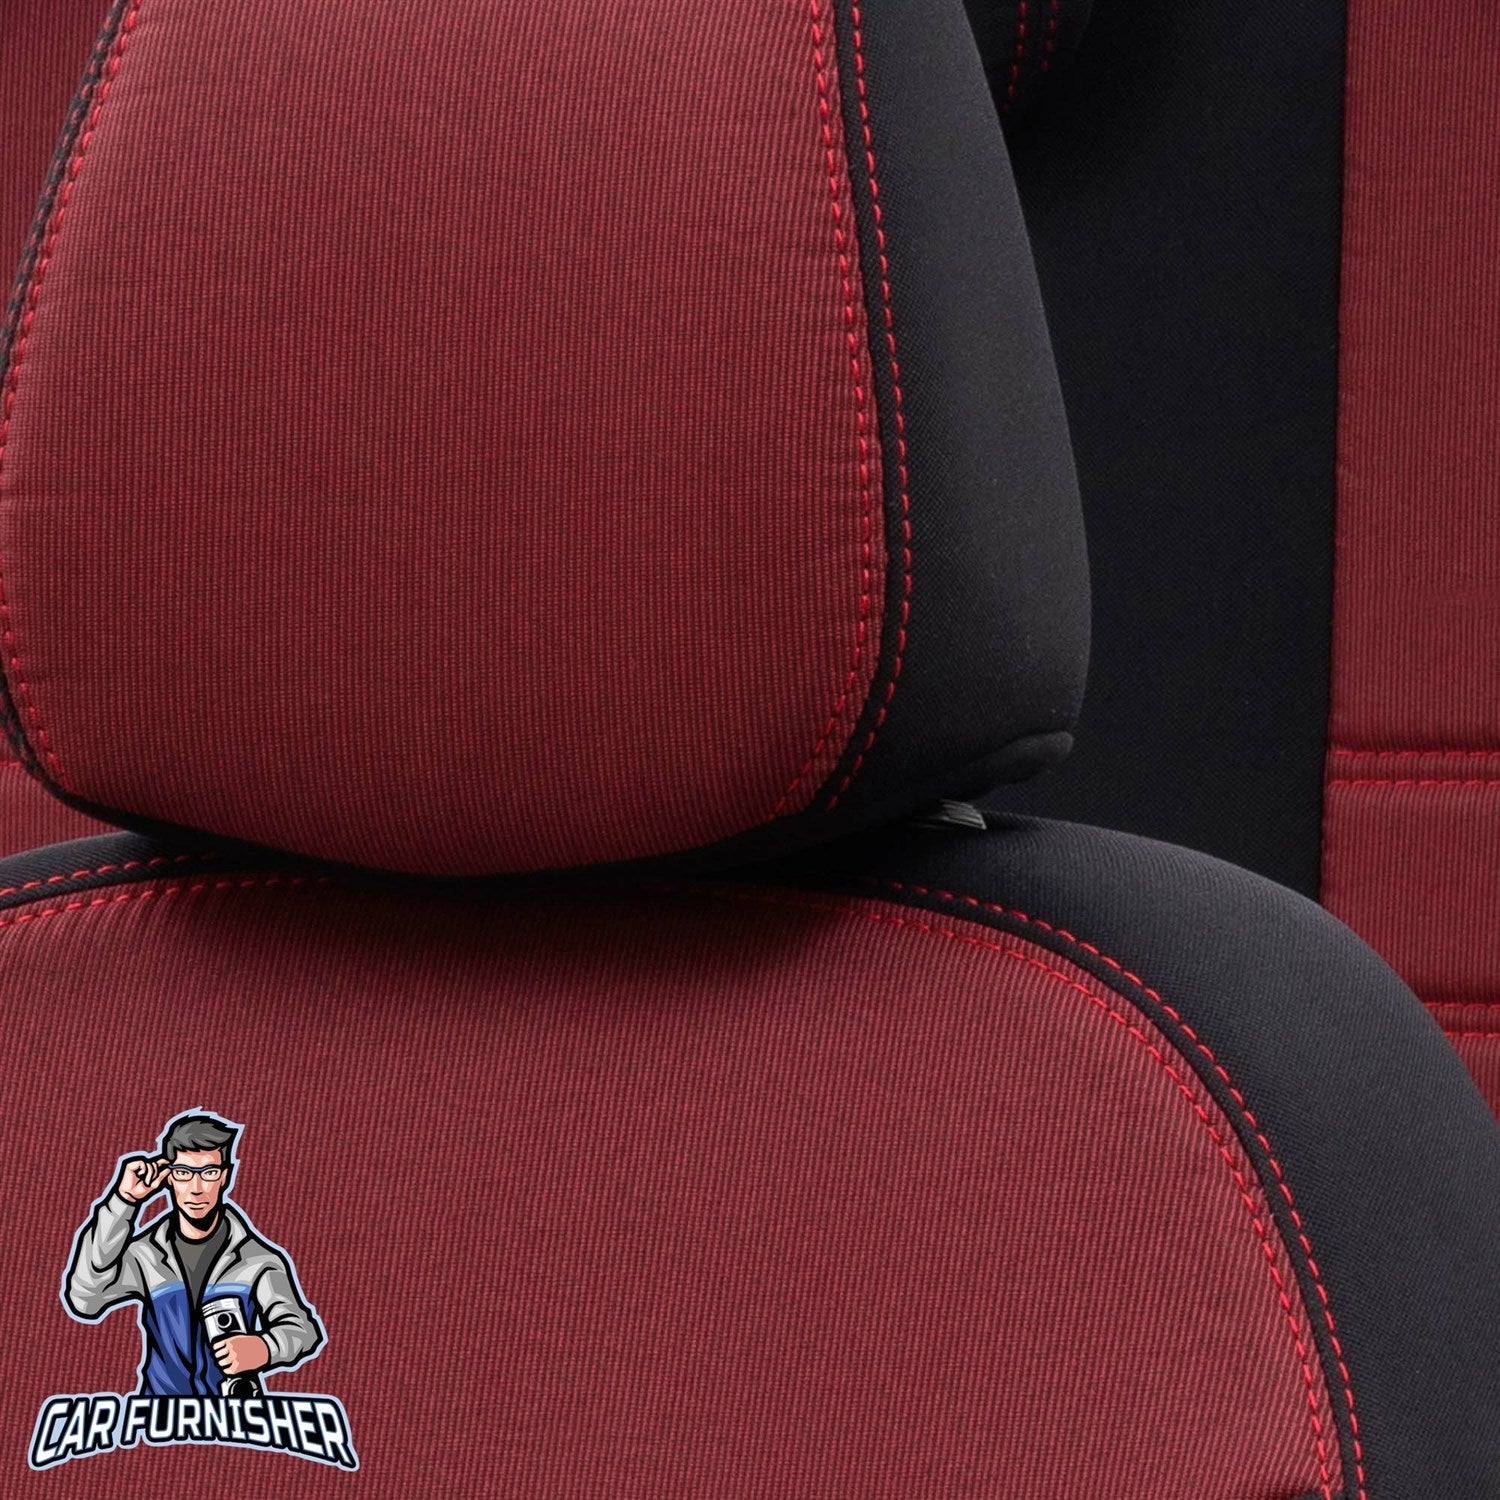 Toyota Hilux Seat Cover Original Jacquard Design Red Jacquard Fabric